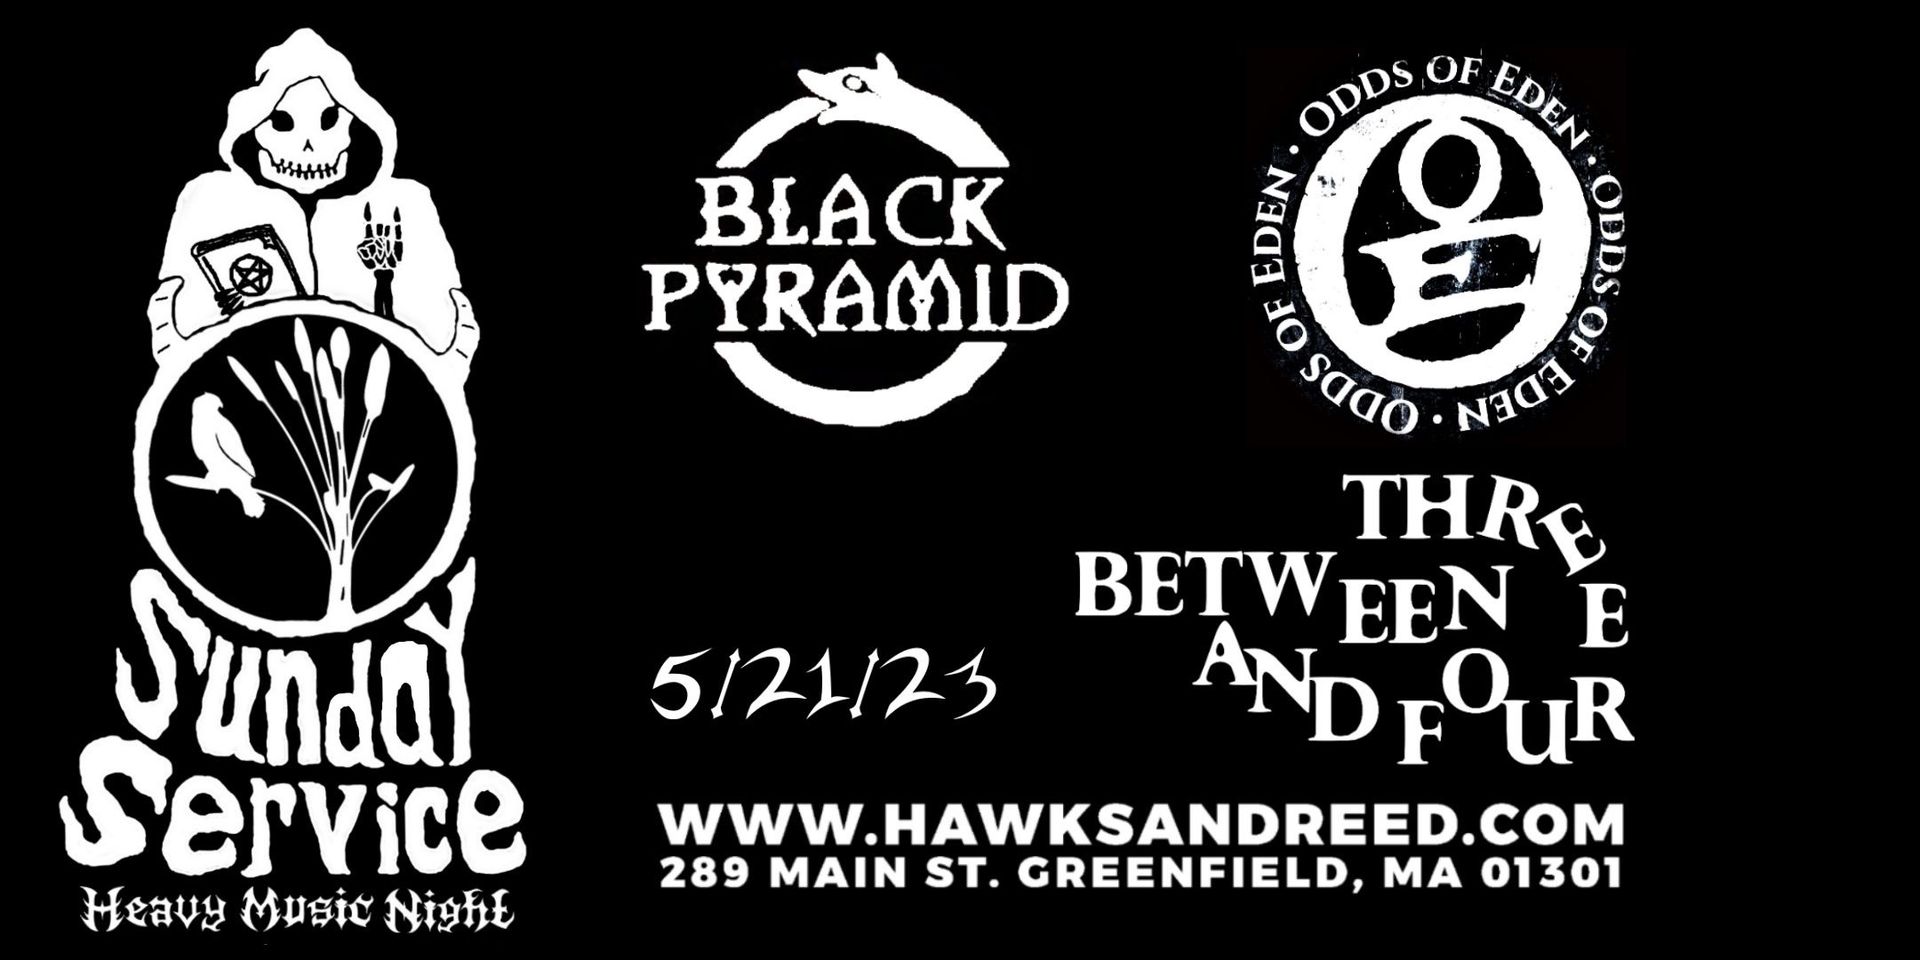 Sunday Service Heavy Music Night: Odds of Eden / Between 3 & 4 / Black Pyramid